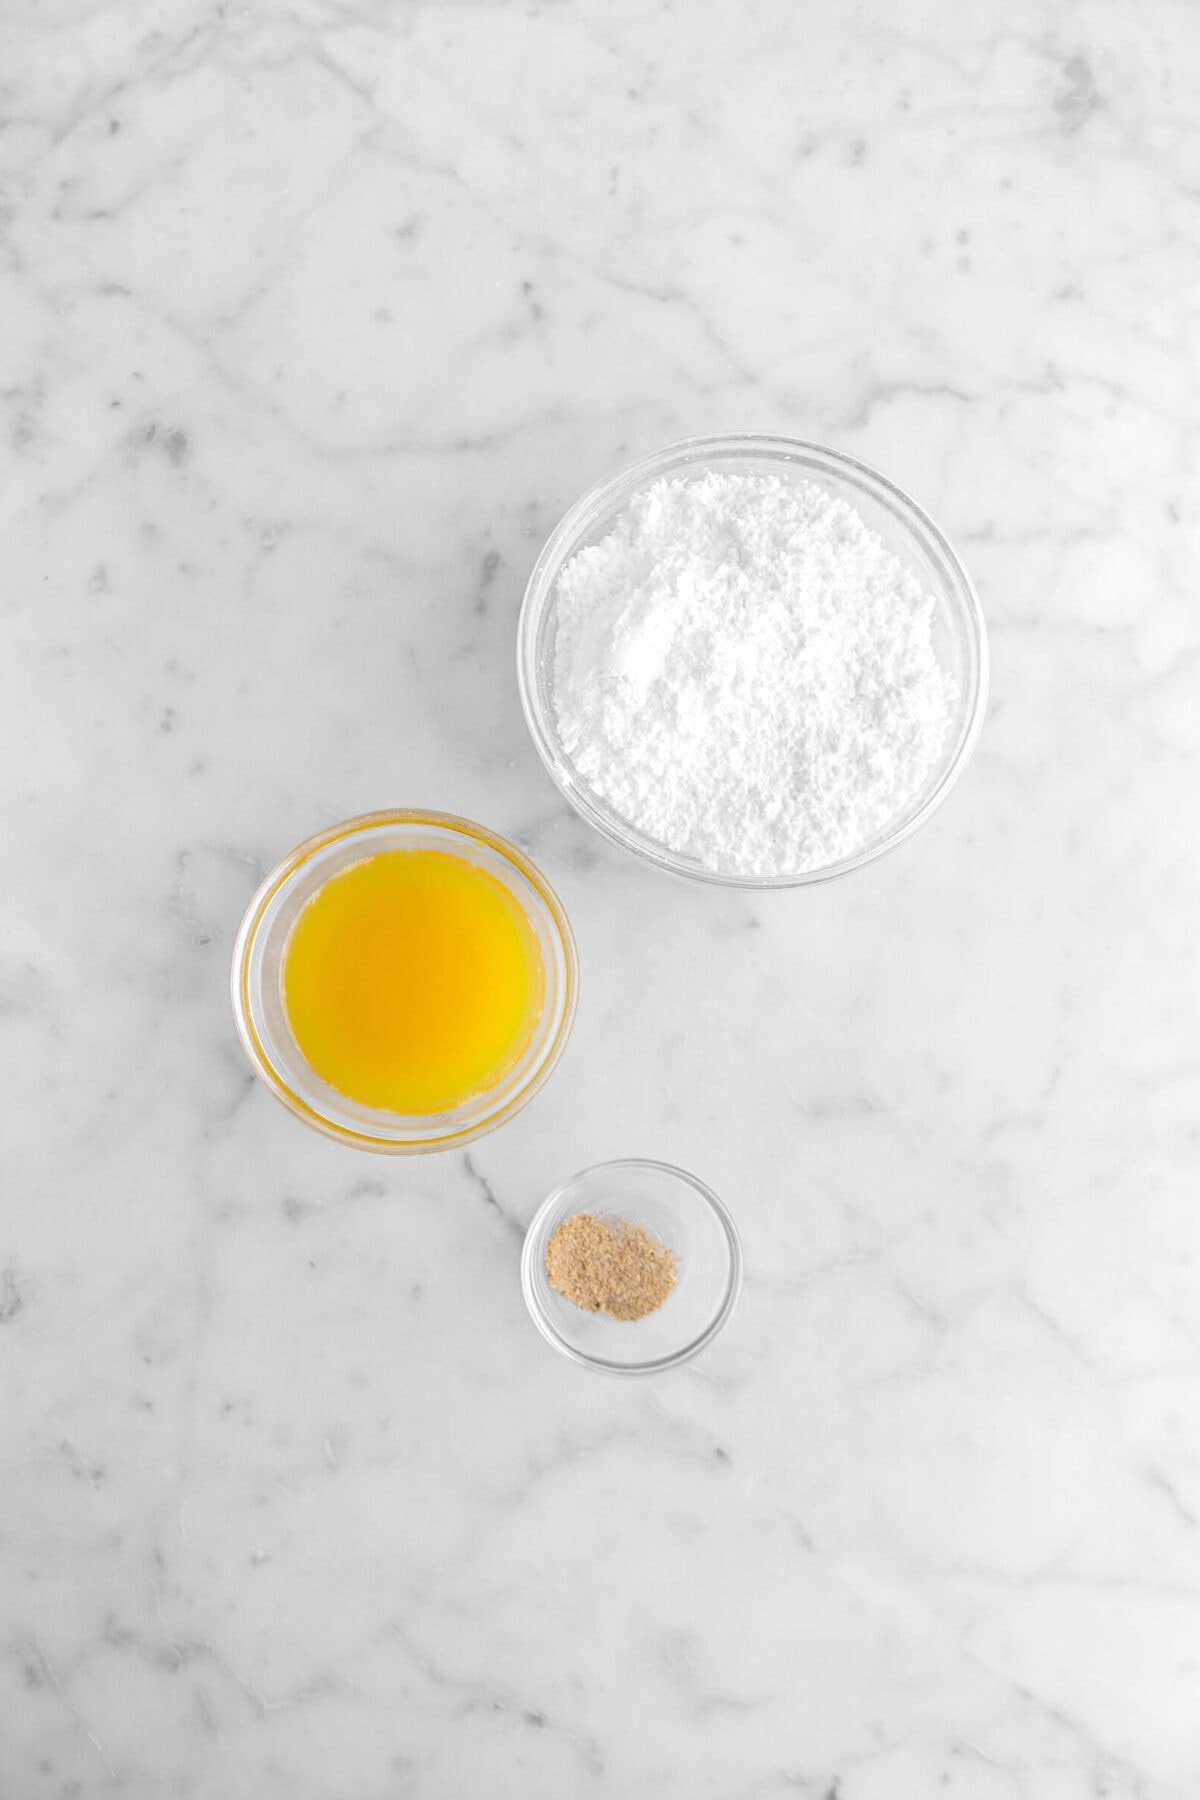 powdered sugar, orange juice, and ground cardamom in glass bowls.